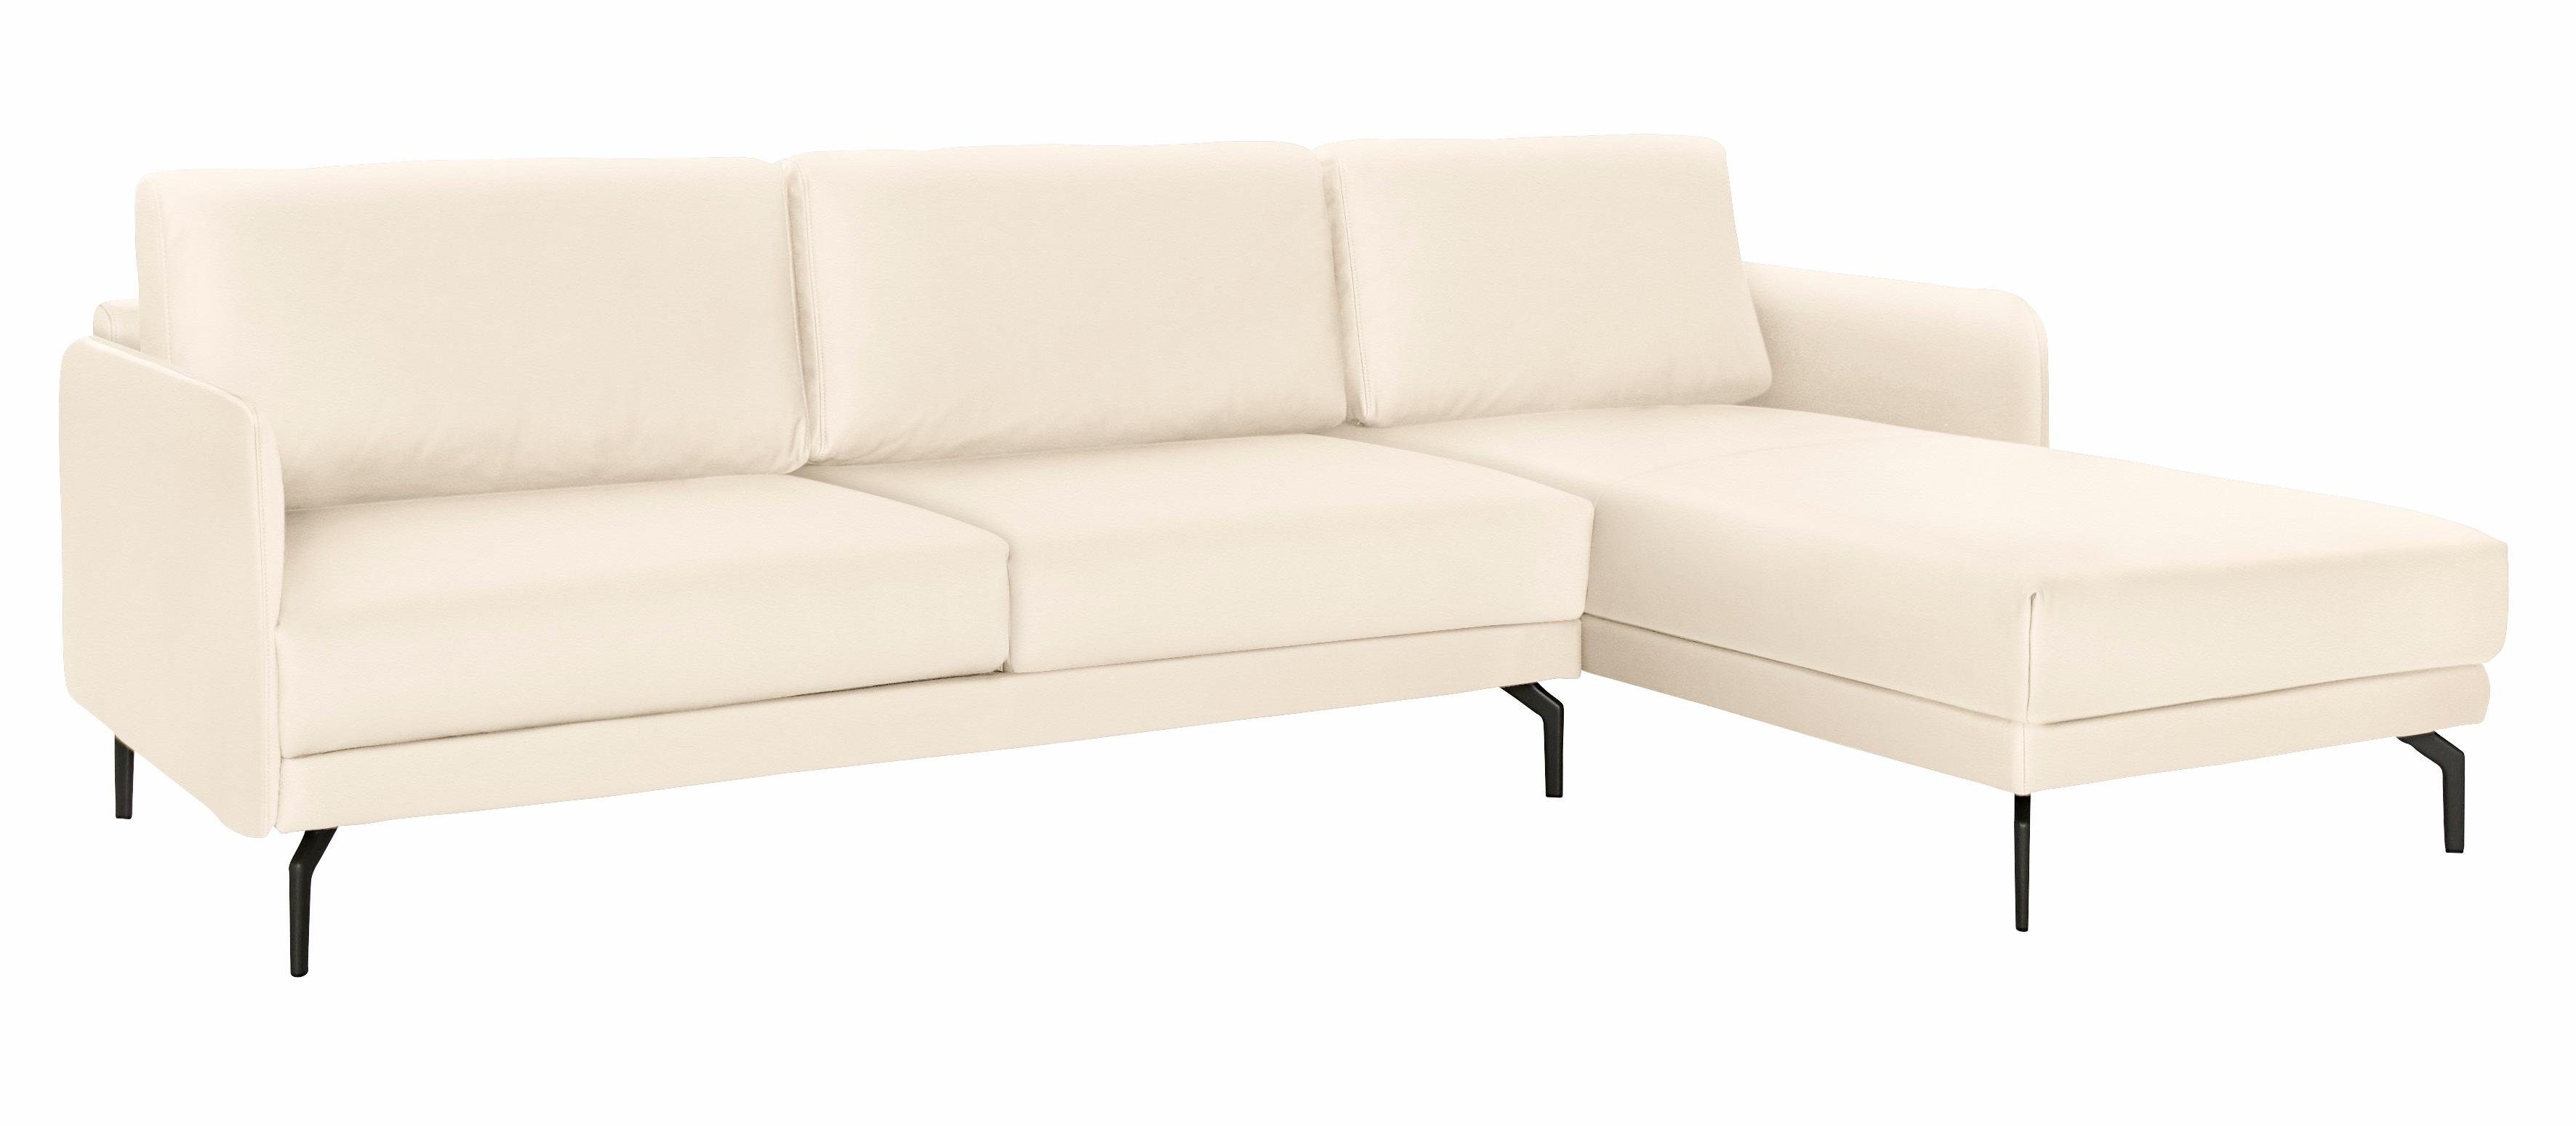 Armlehne 274 sofa sehr cm, Breite Umbragrau Alugussfuß Ecksofa schmal, hülsta hs.450,